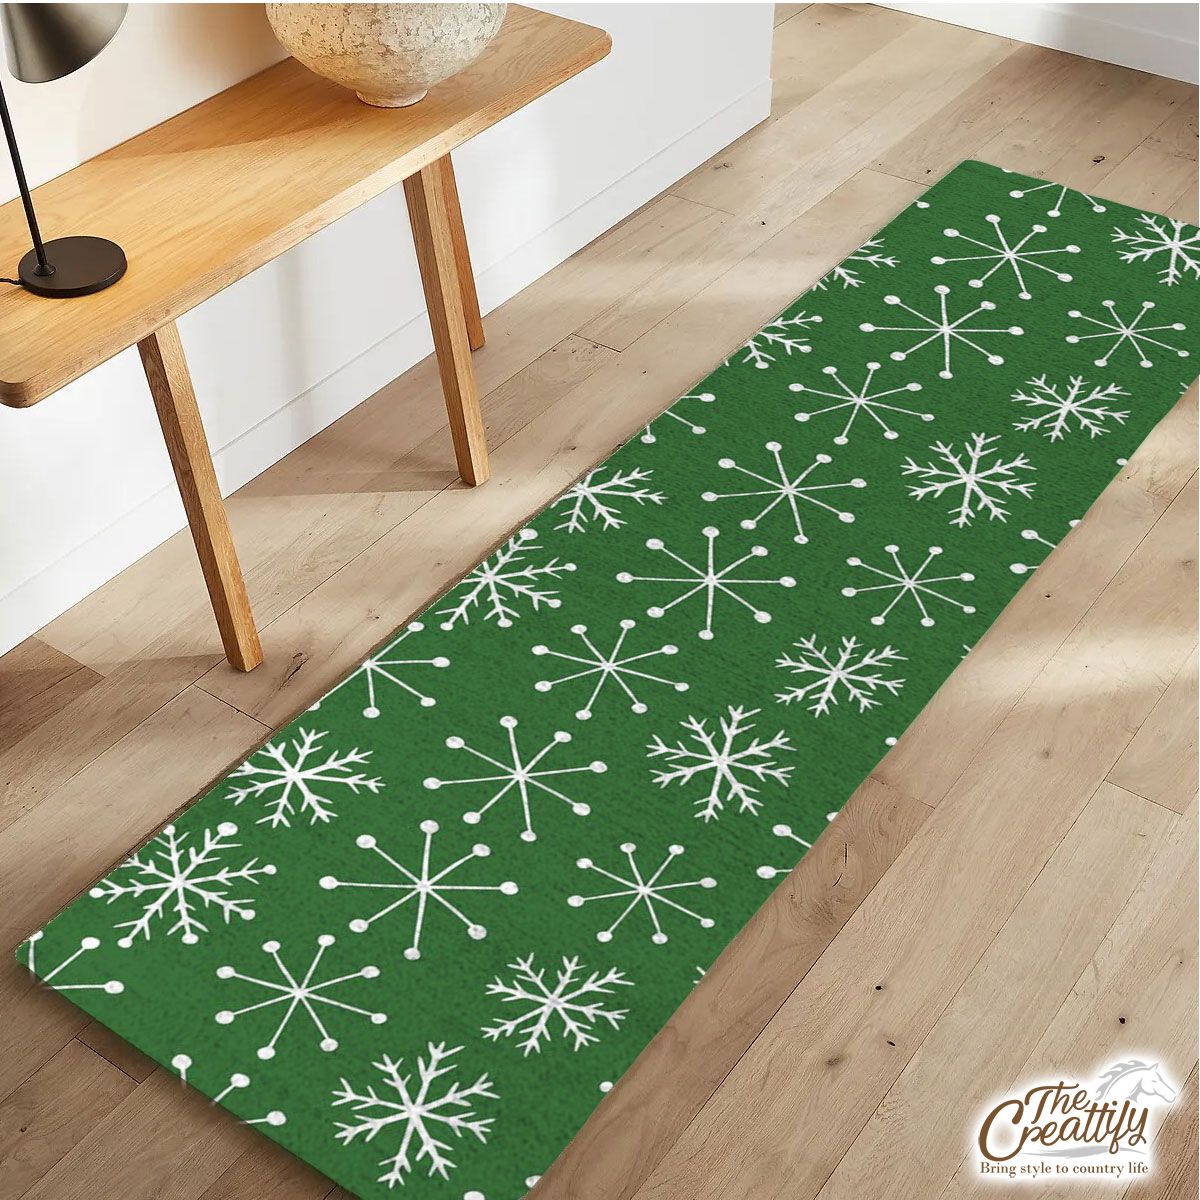 Green And White Snowflake Runner Carpet